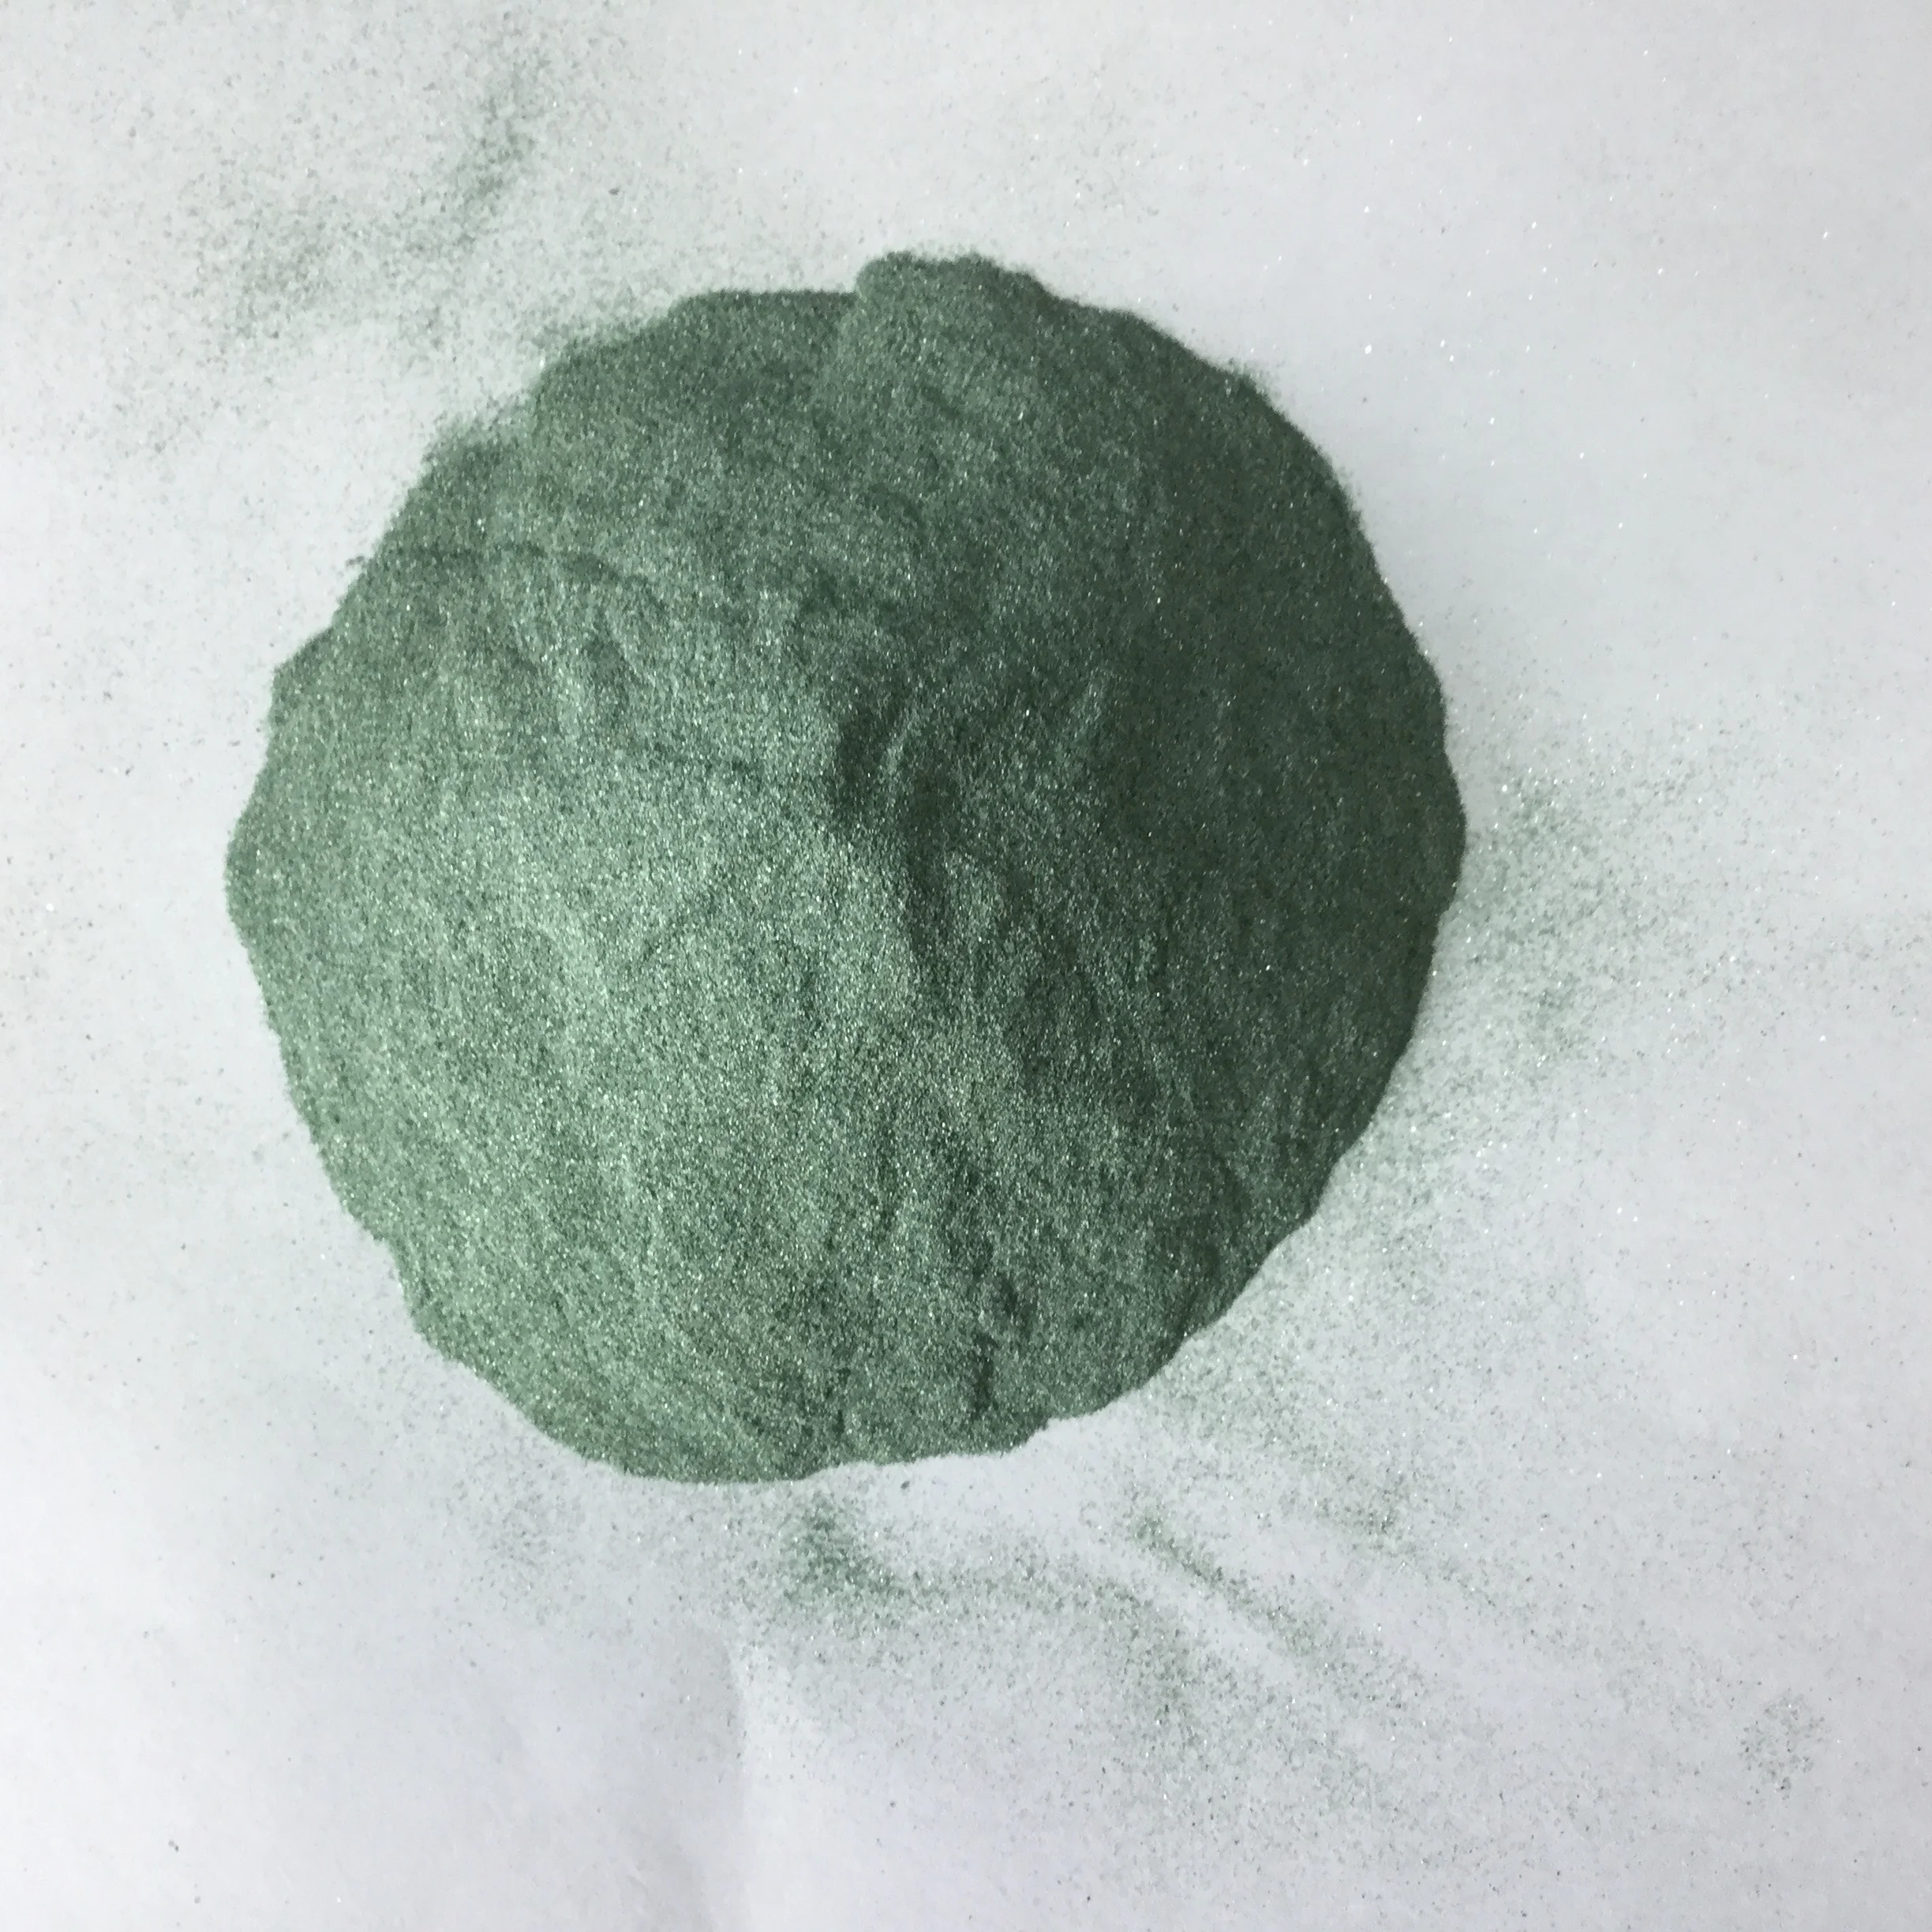 marble powder /green marble powder/green silicon carbide powder for polishing